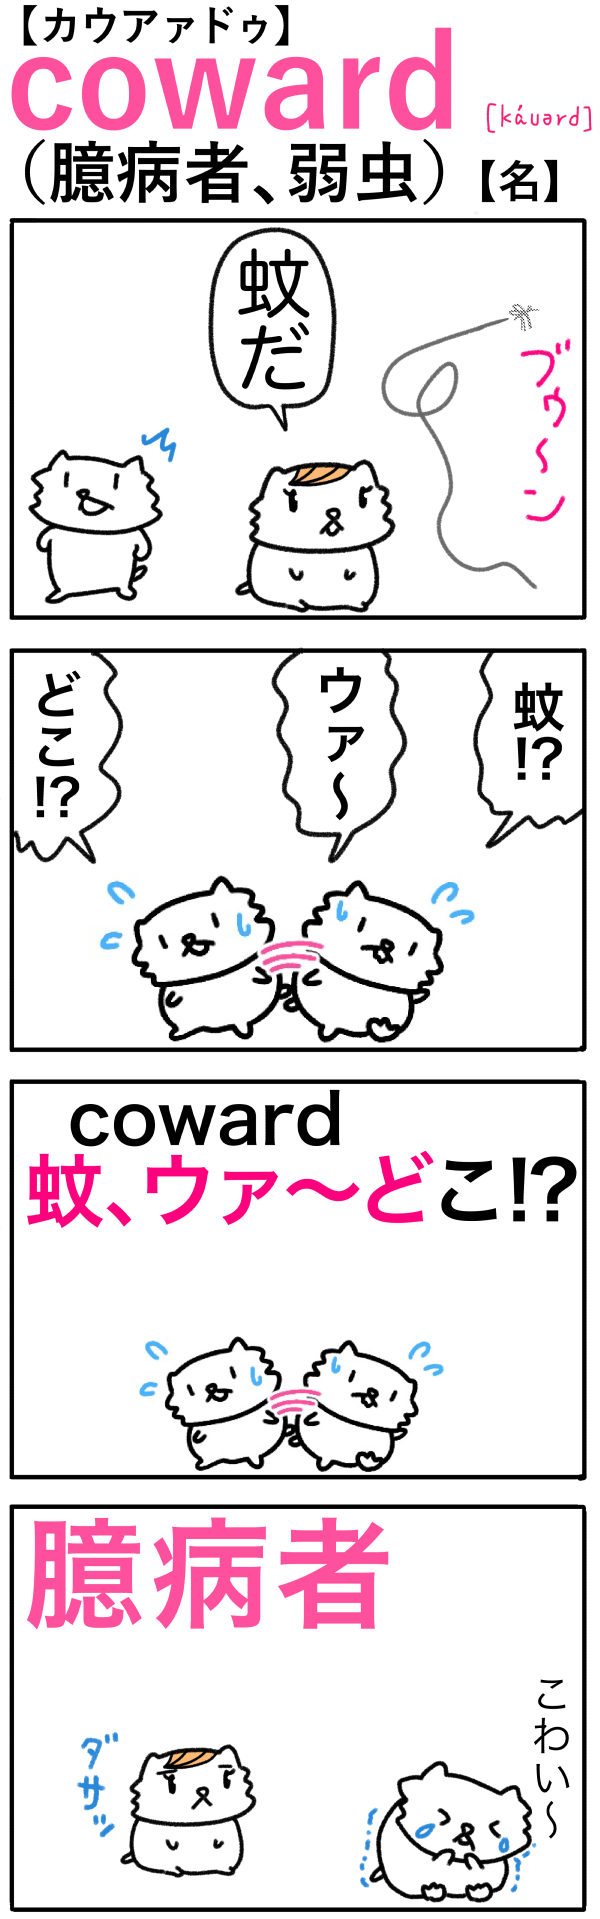 coward（臆病者）の語呂合わせ英単語